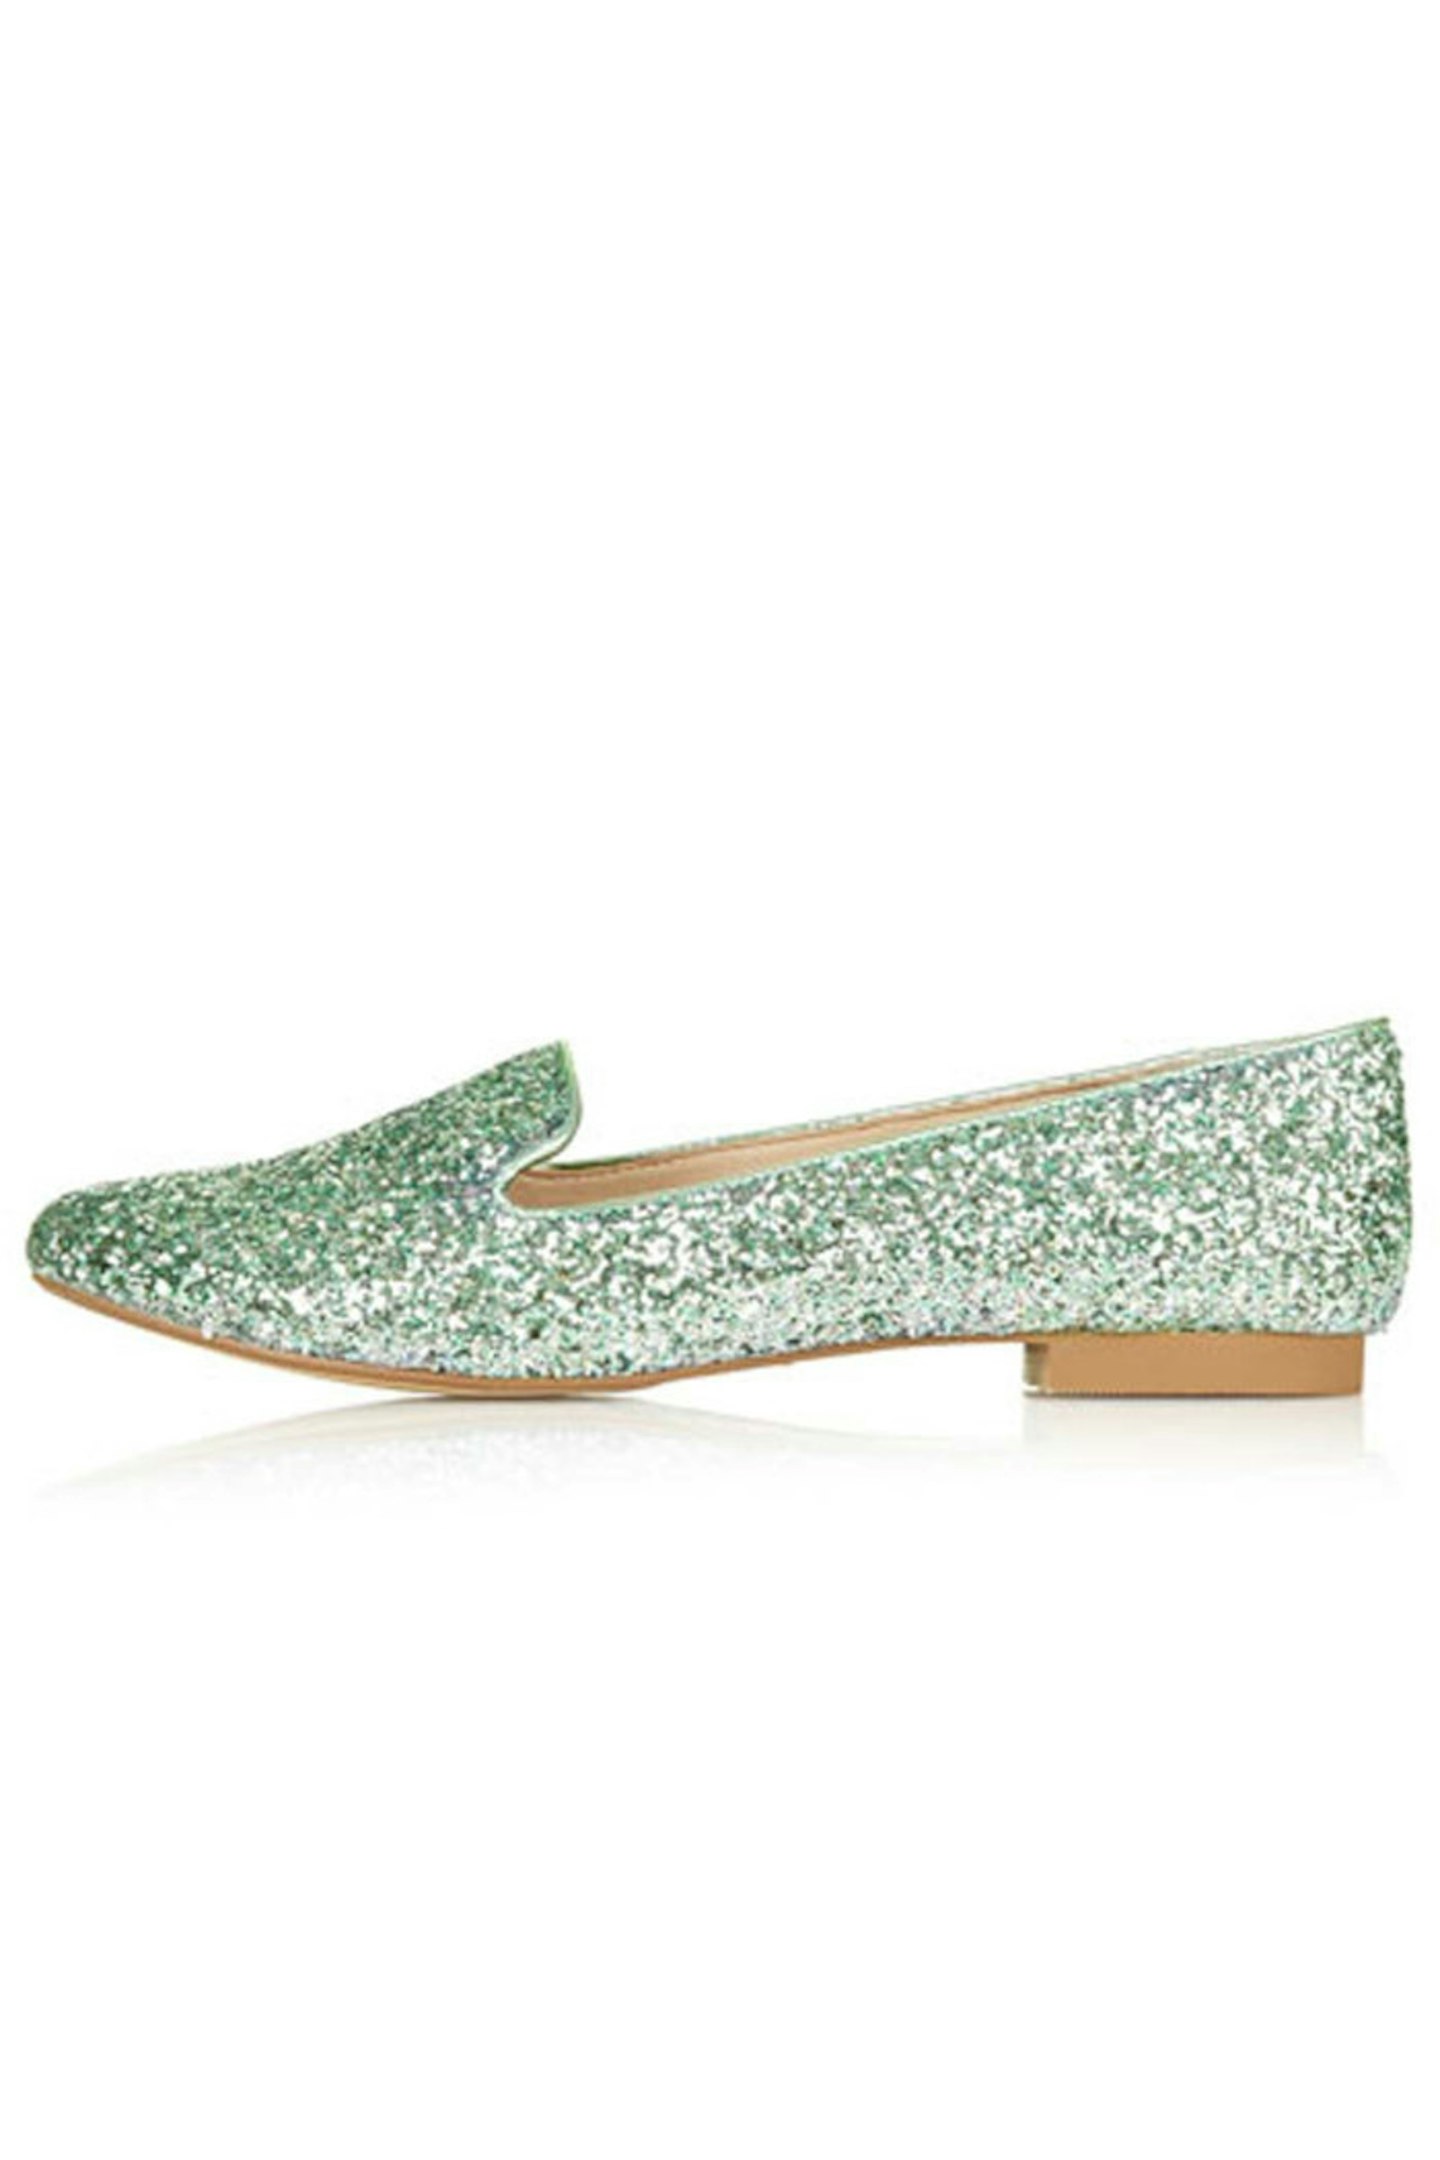 Green Glitter shoes, £28, Topshop